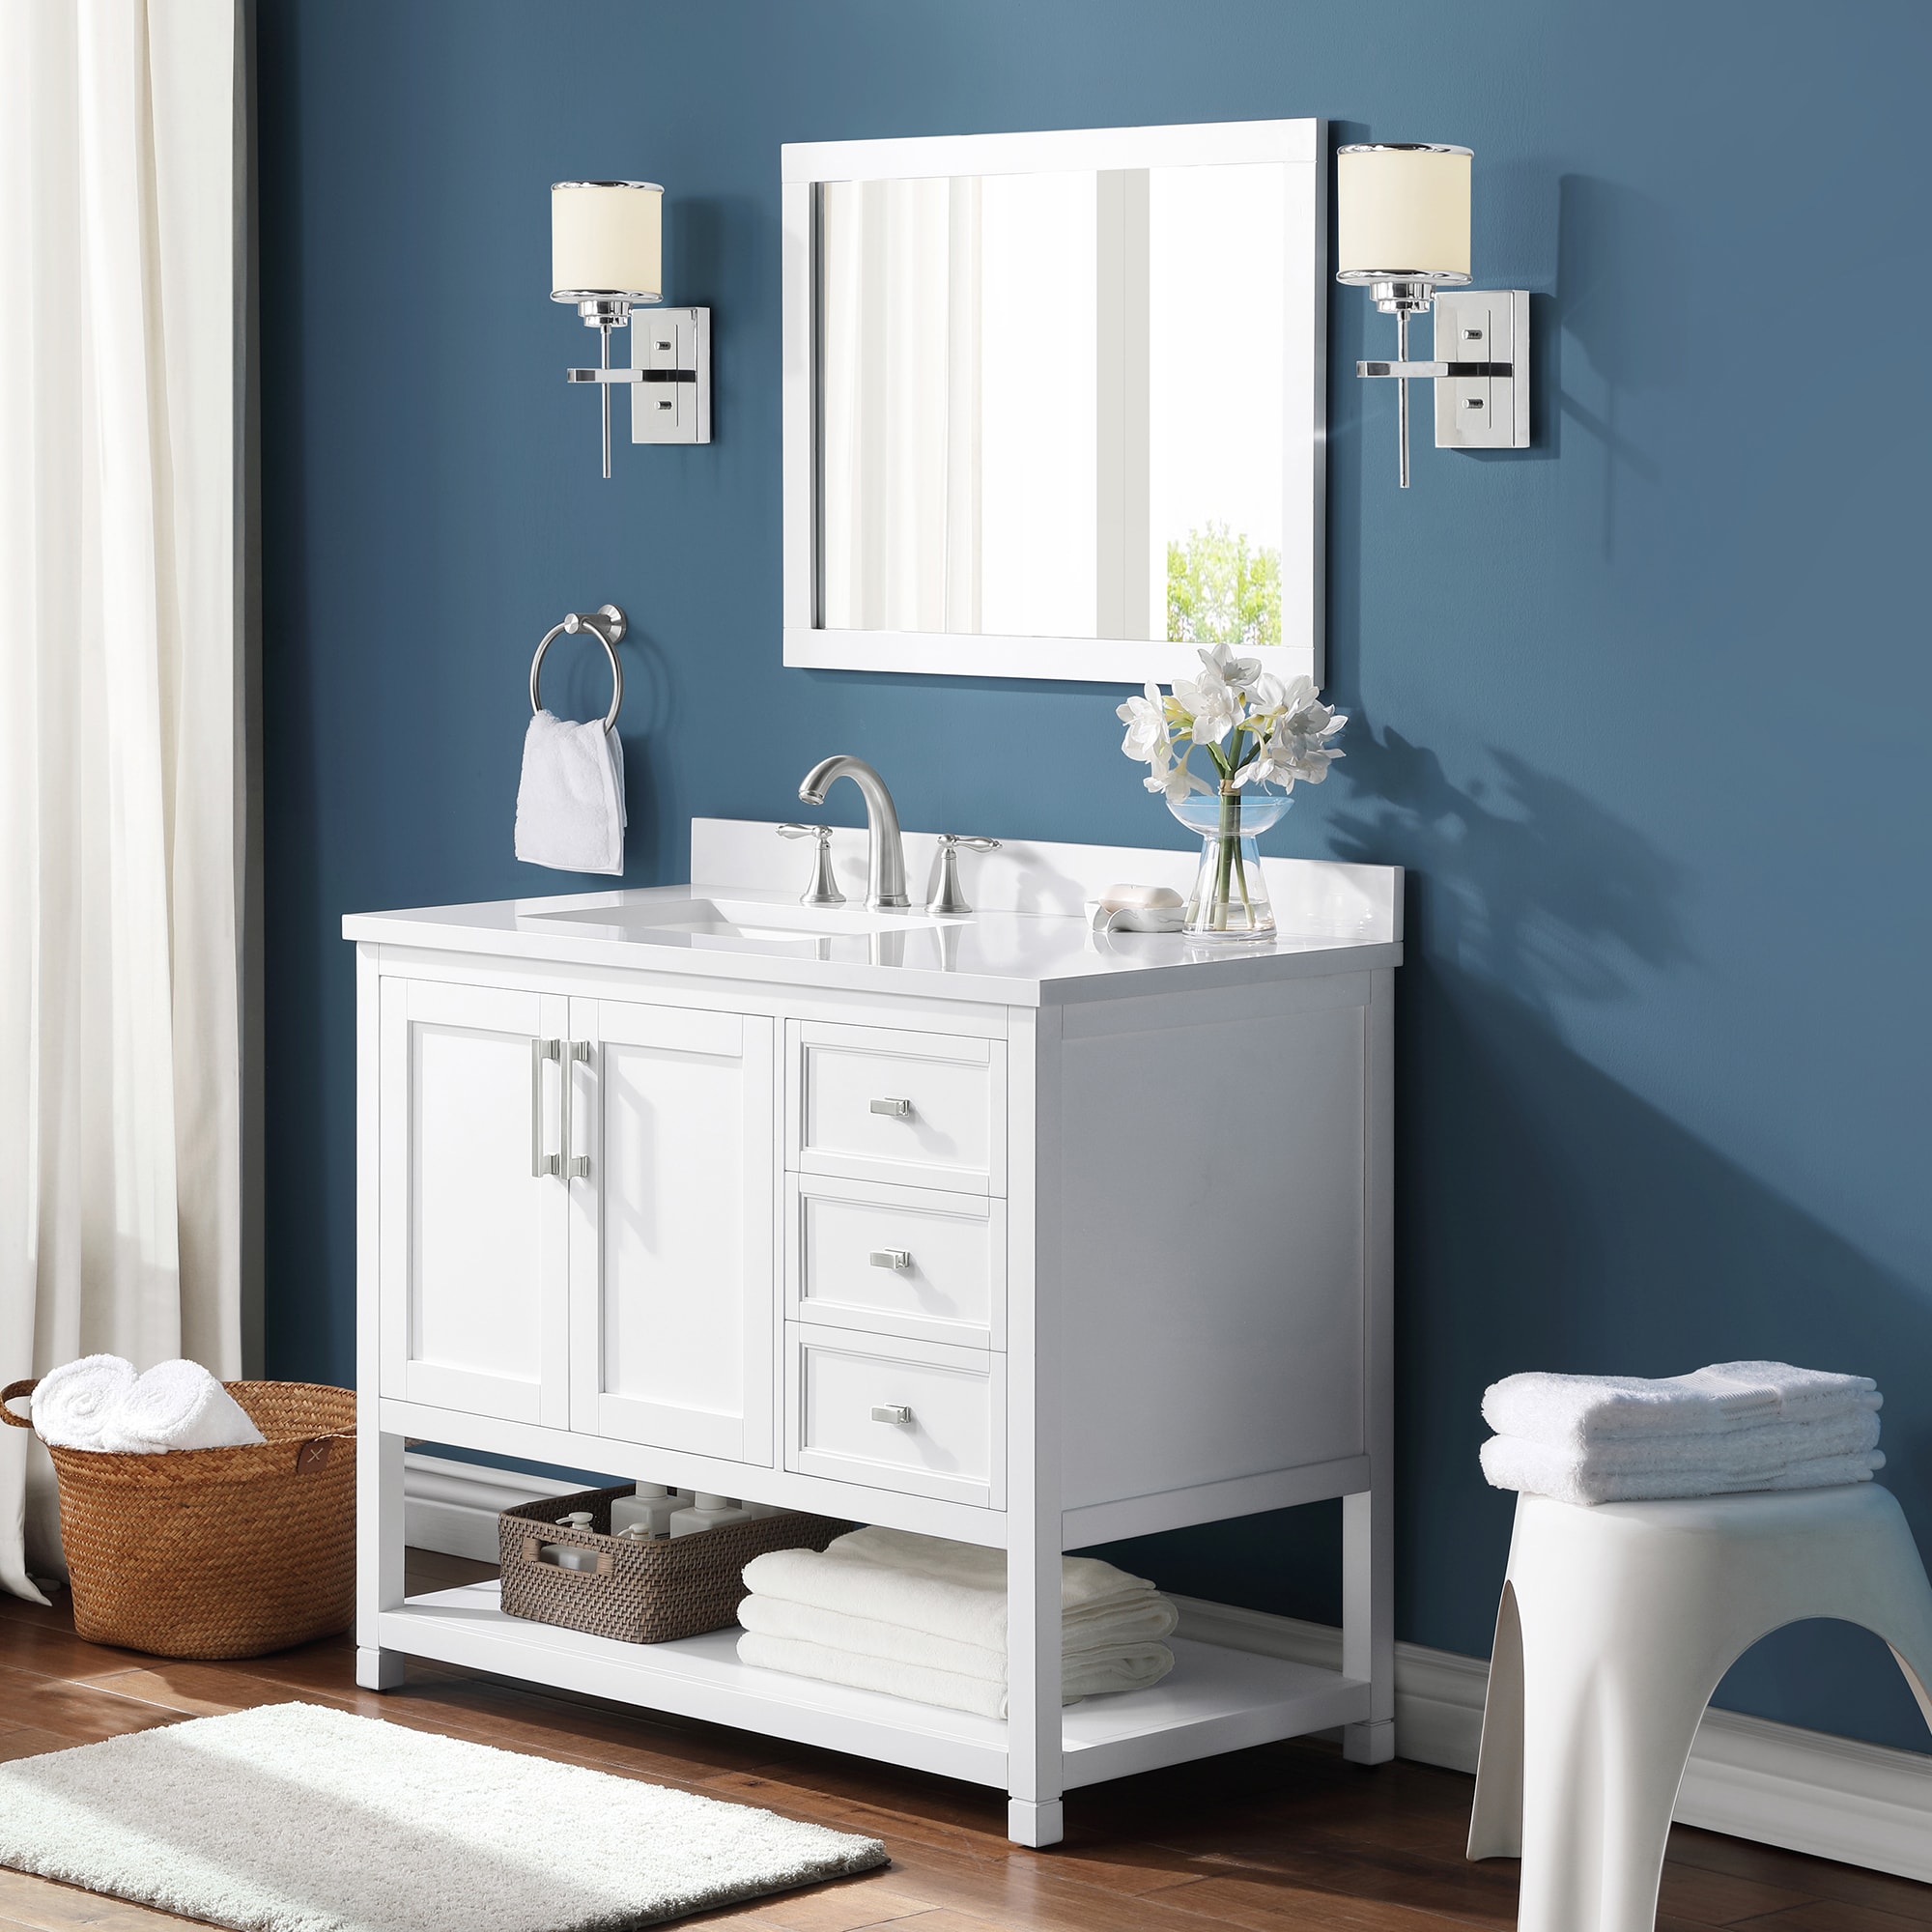 OVE Decors Stanley 42-in White Undermount Single Sink Bathroom Vanity ...